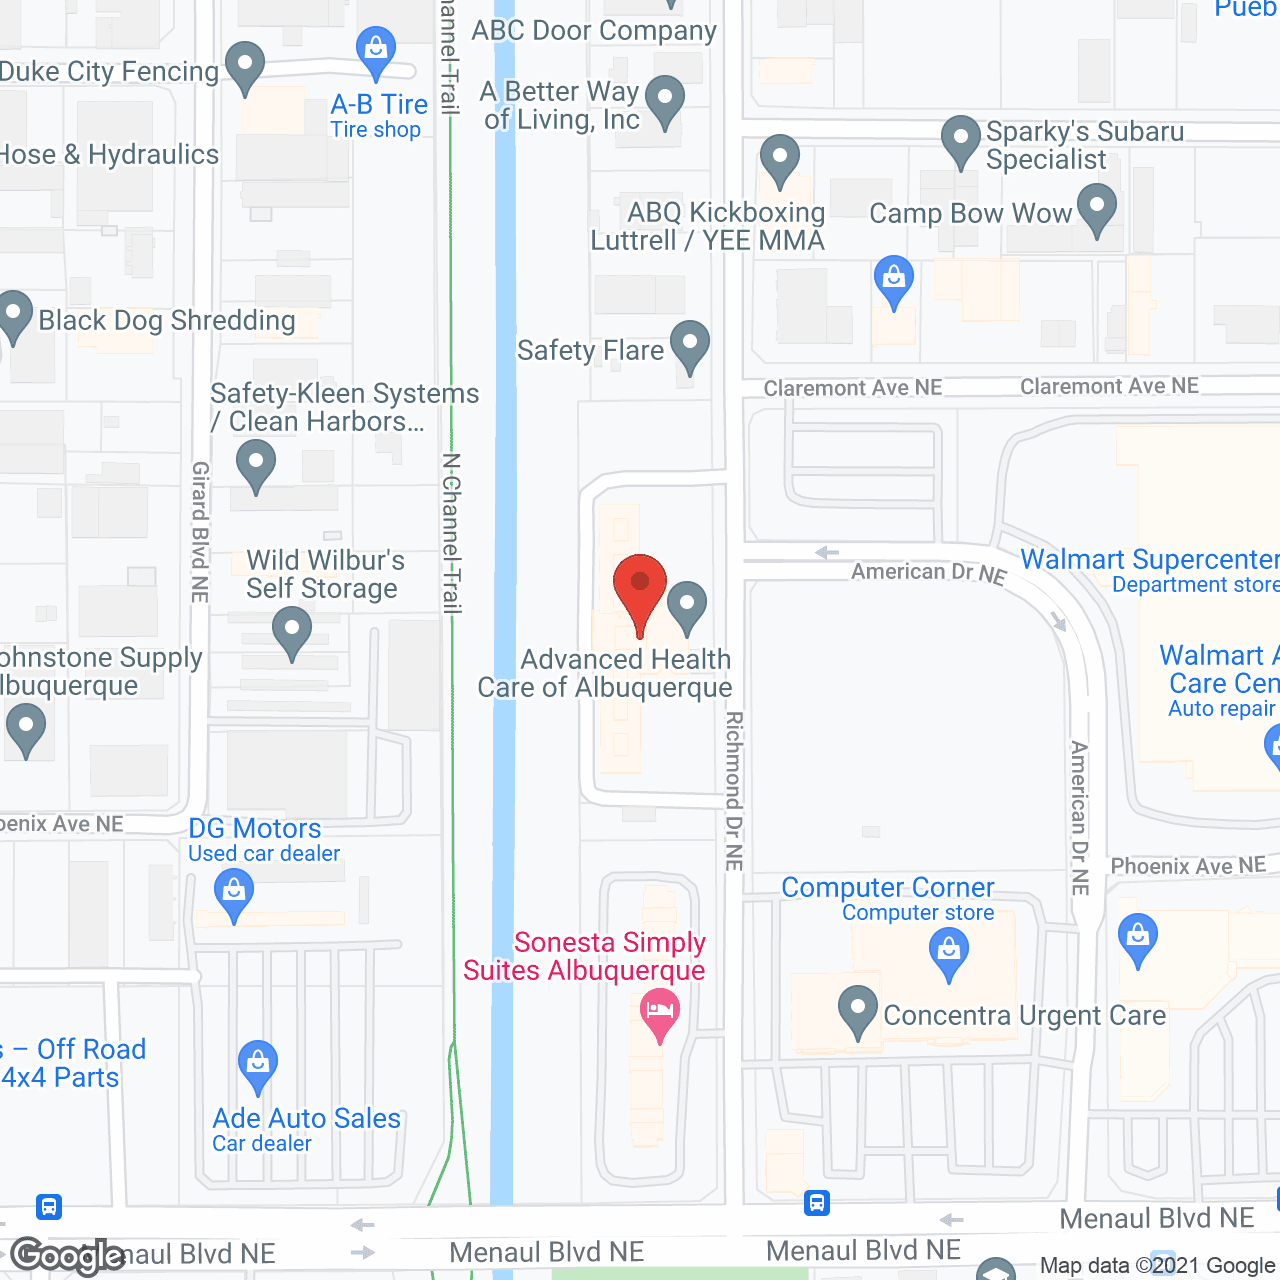 Advanced Health Care of Albuquerque in google map